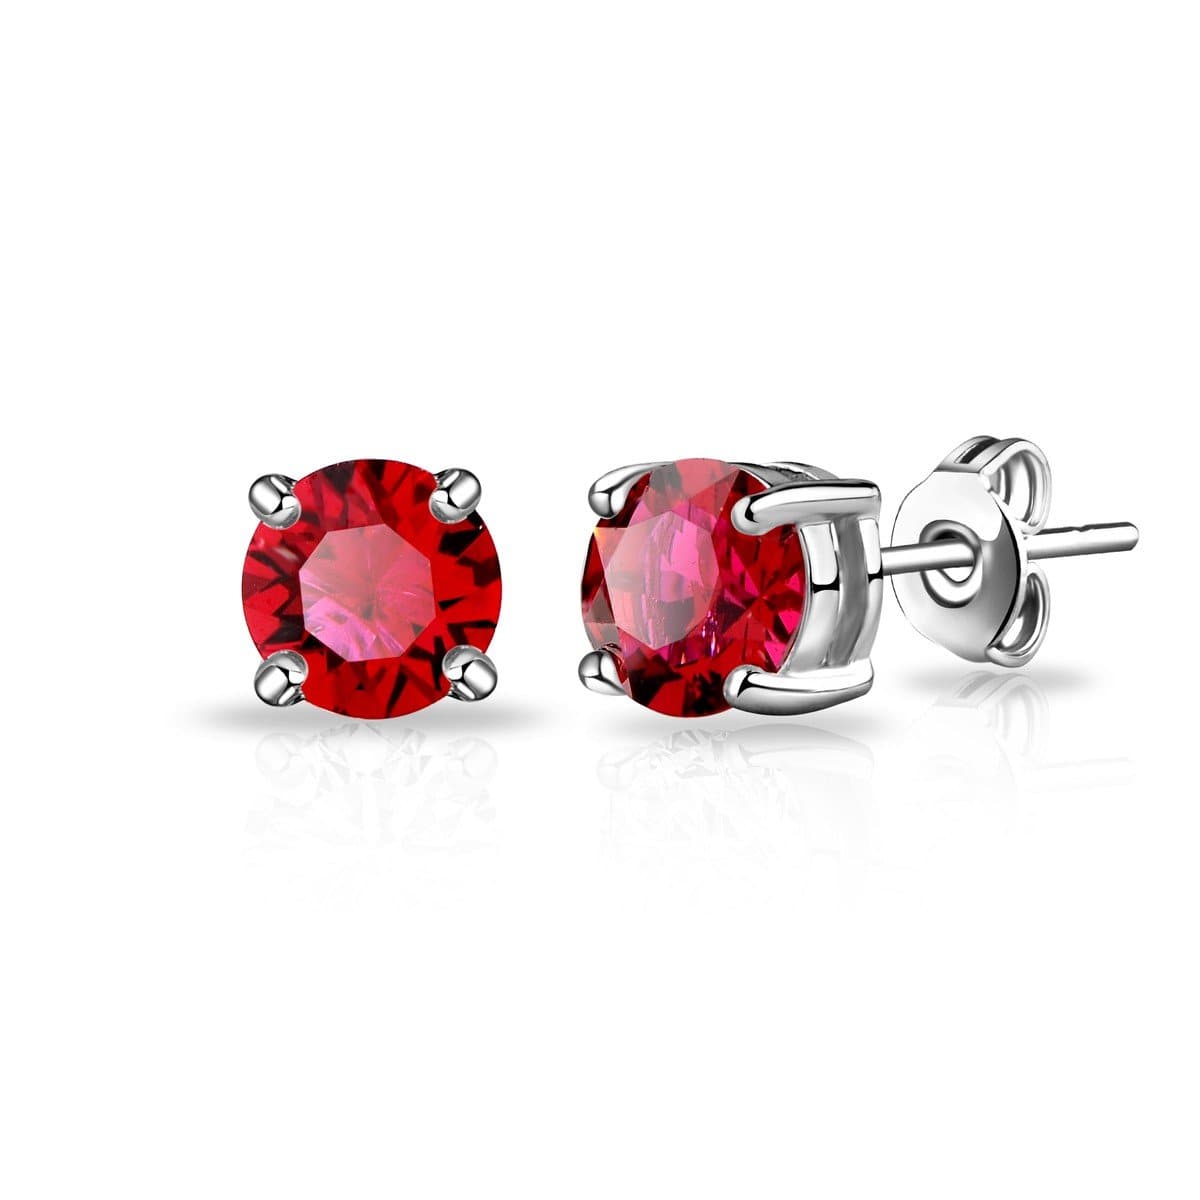 Red Stud Earrings Created with Zircondia® Crystals by Philip Jones Jewellery